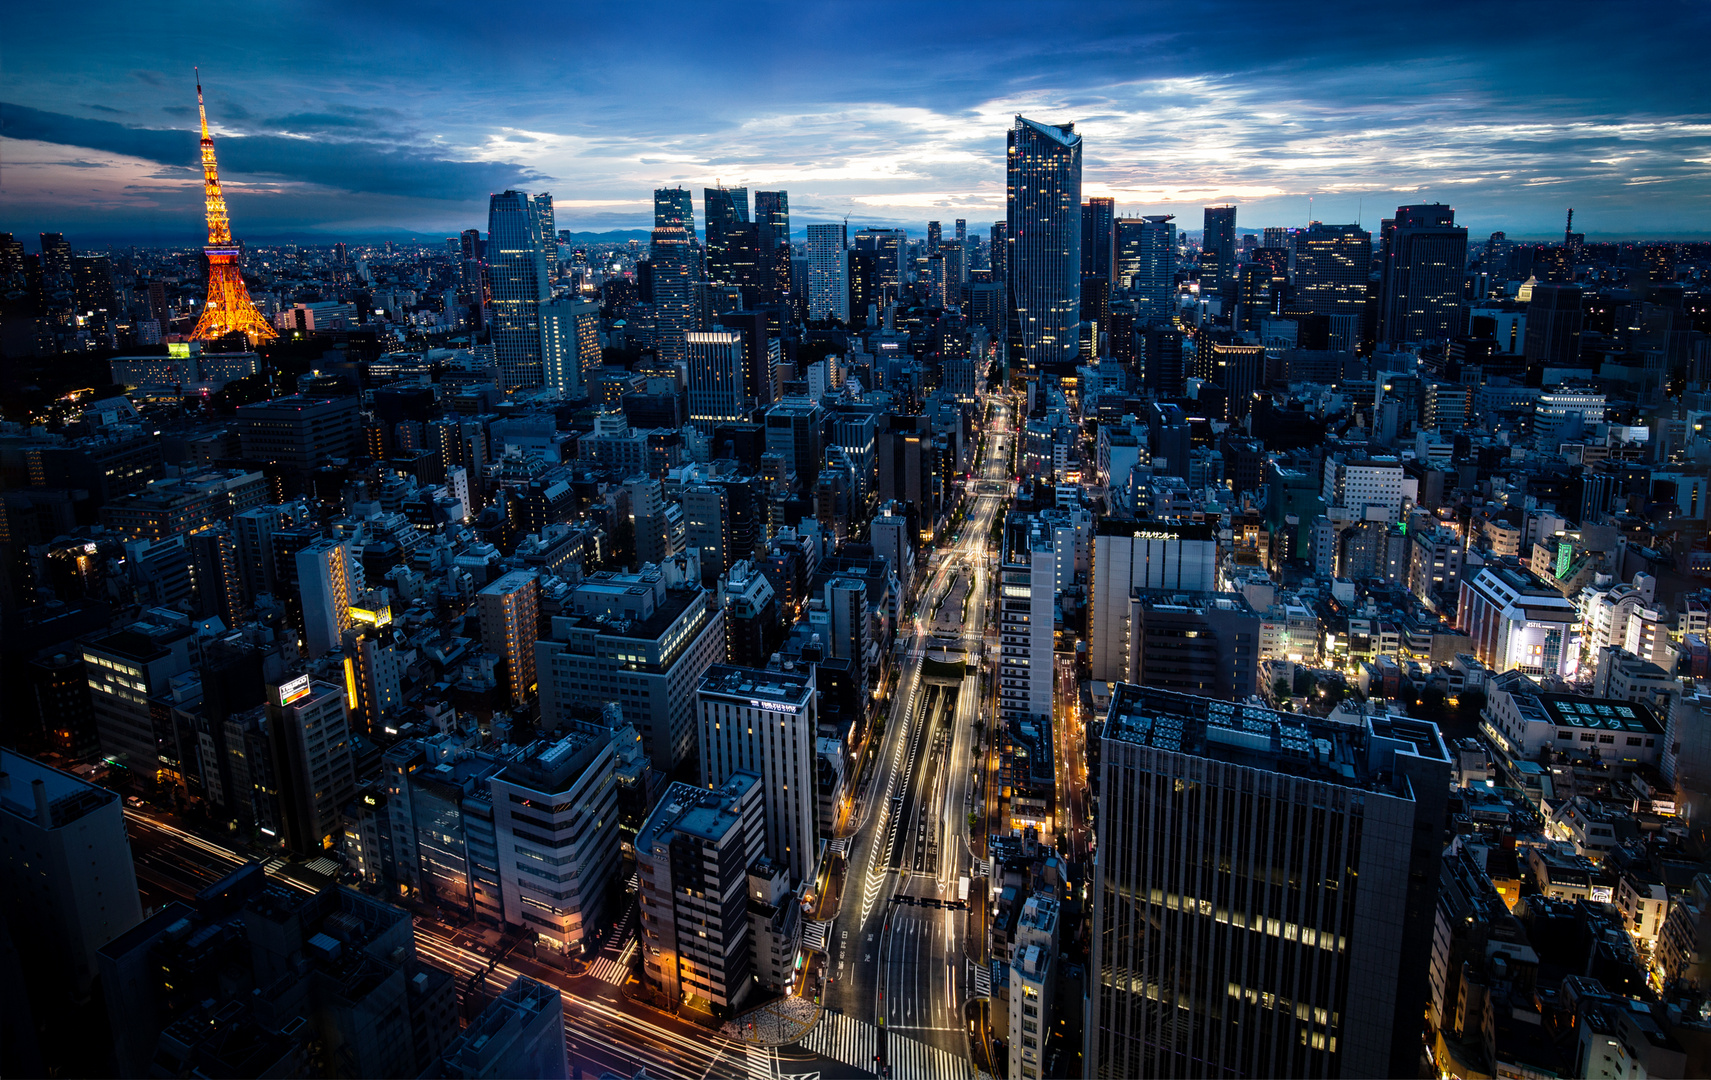 Tokyo Blue Hour